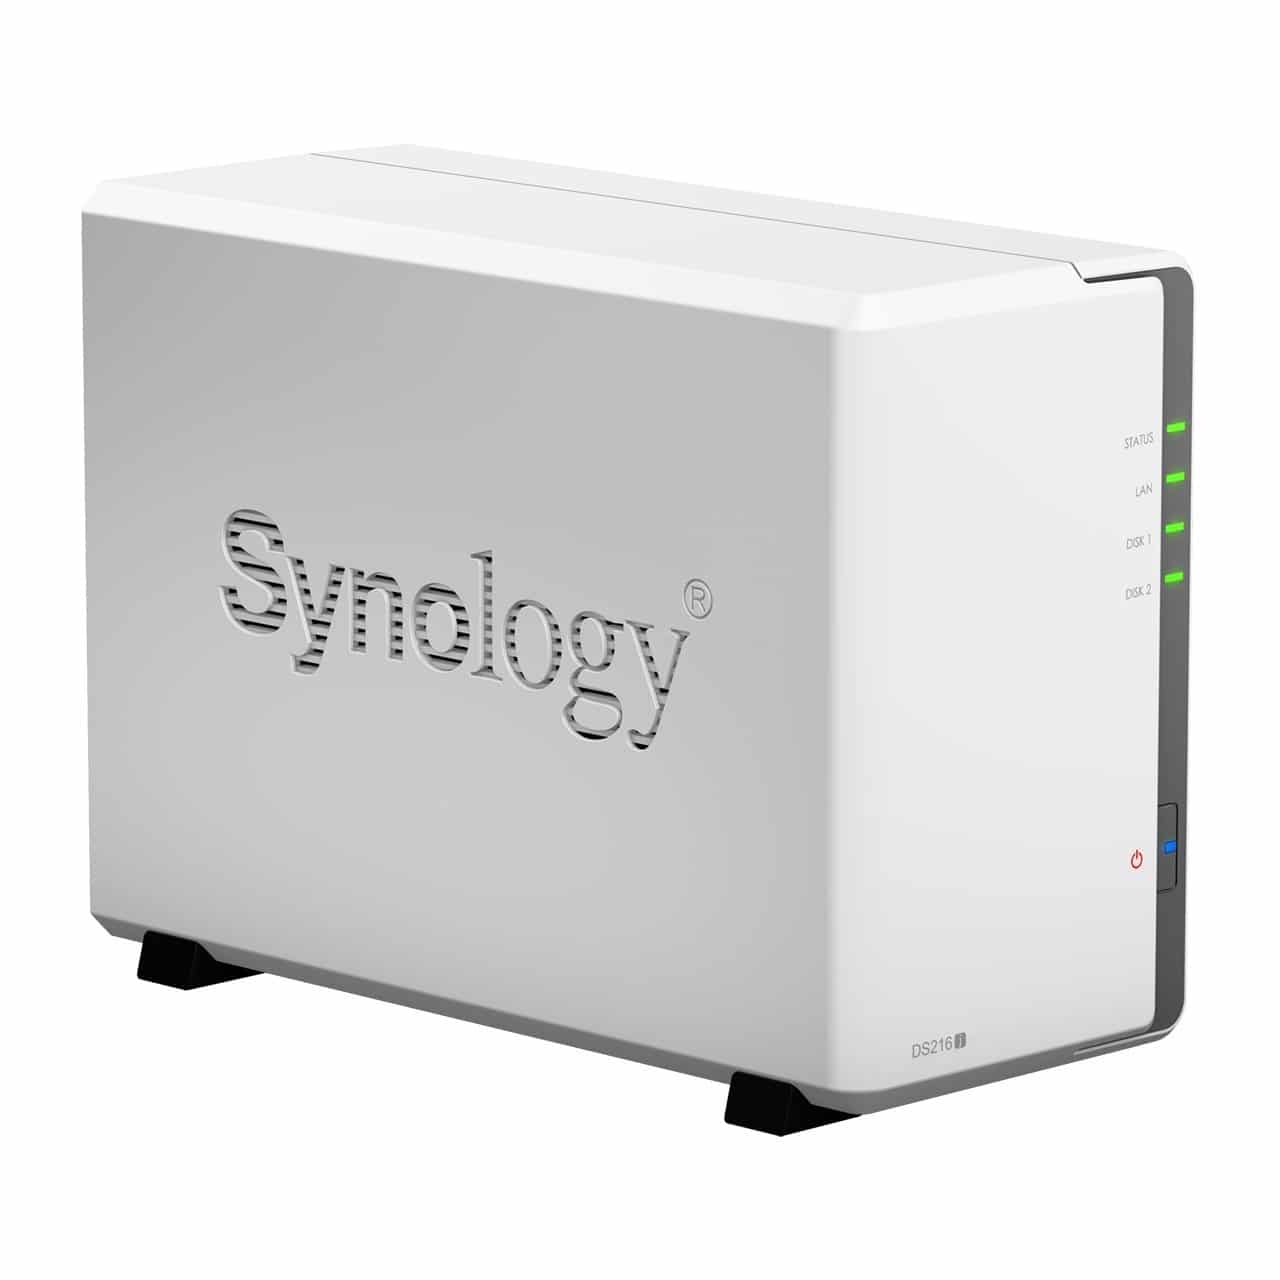 Synology - serveur de stockage (nas) - ds218 - 2 baies - boitier